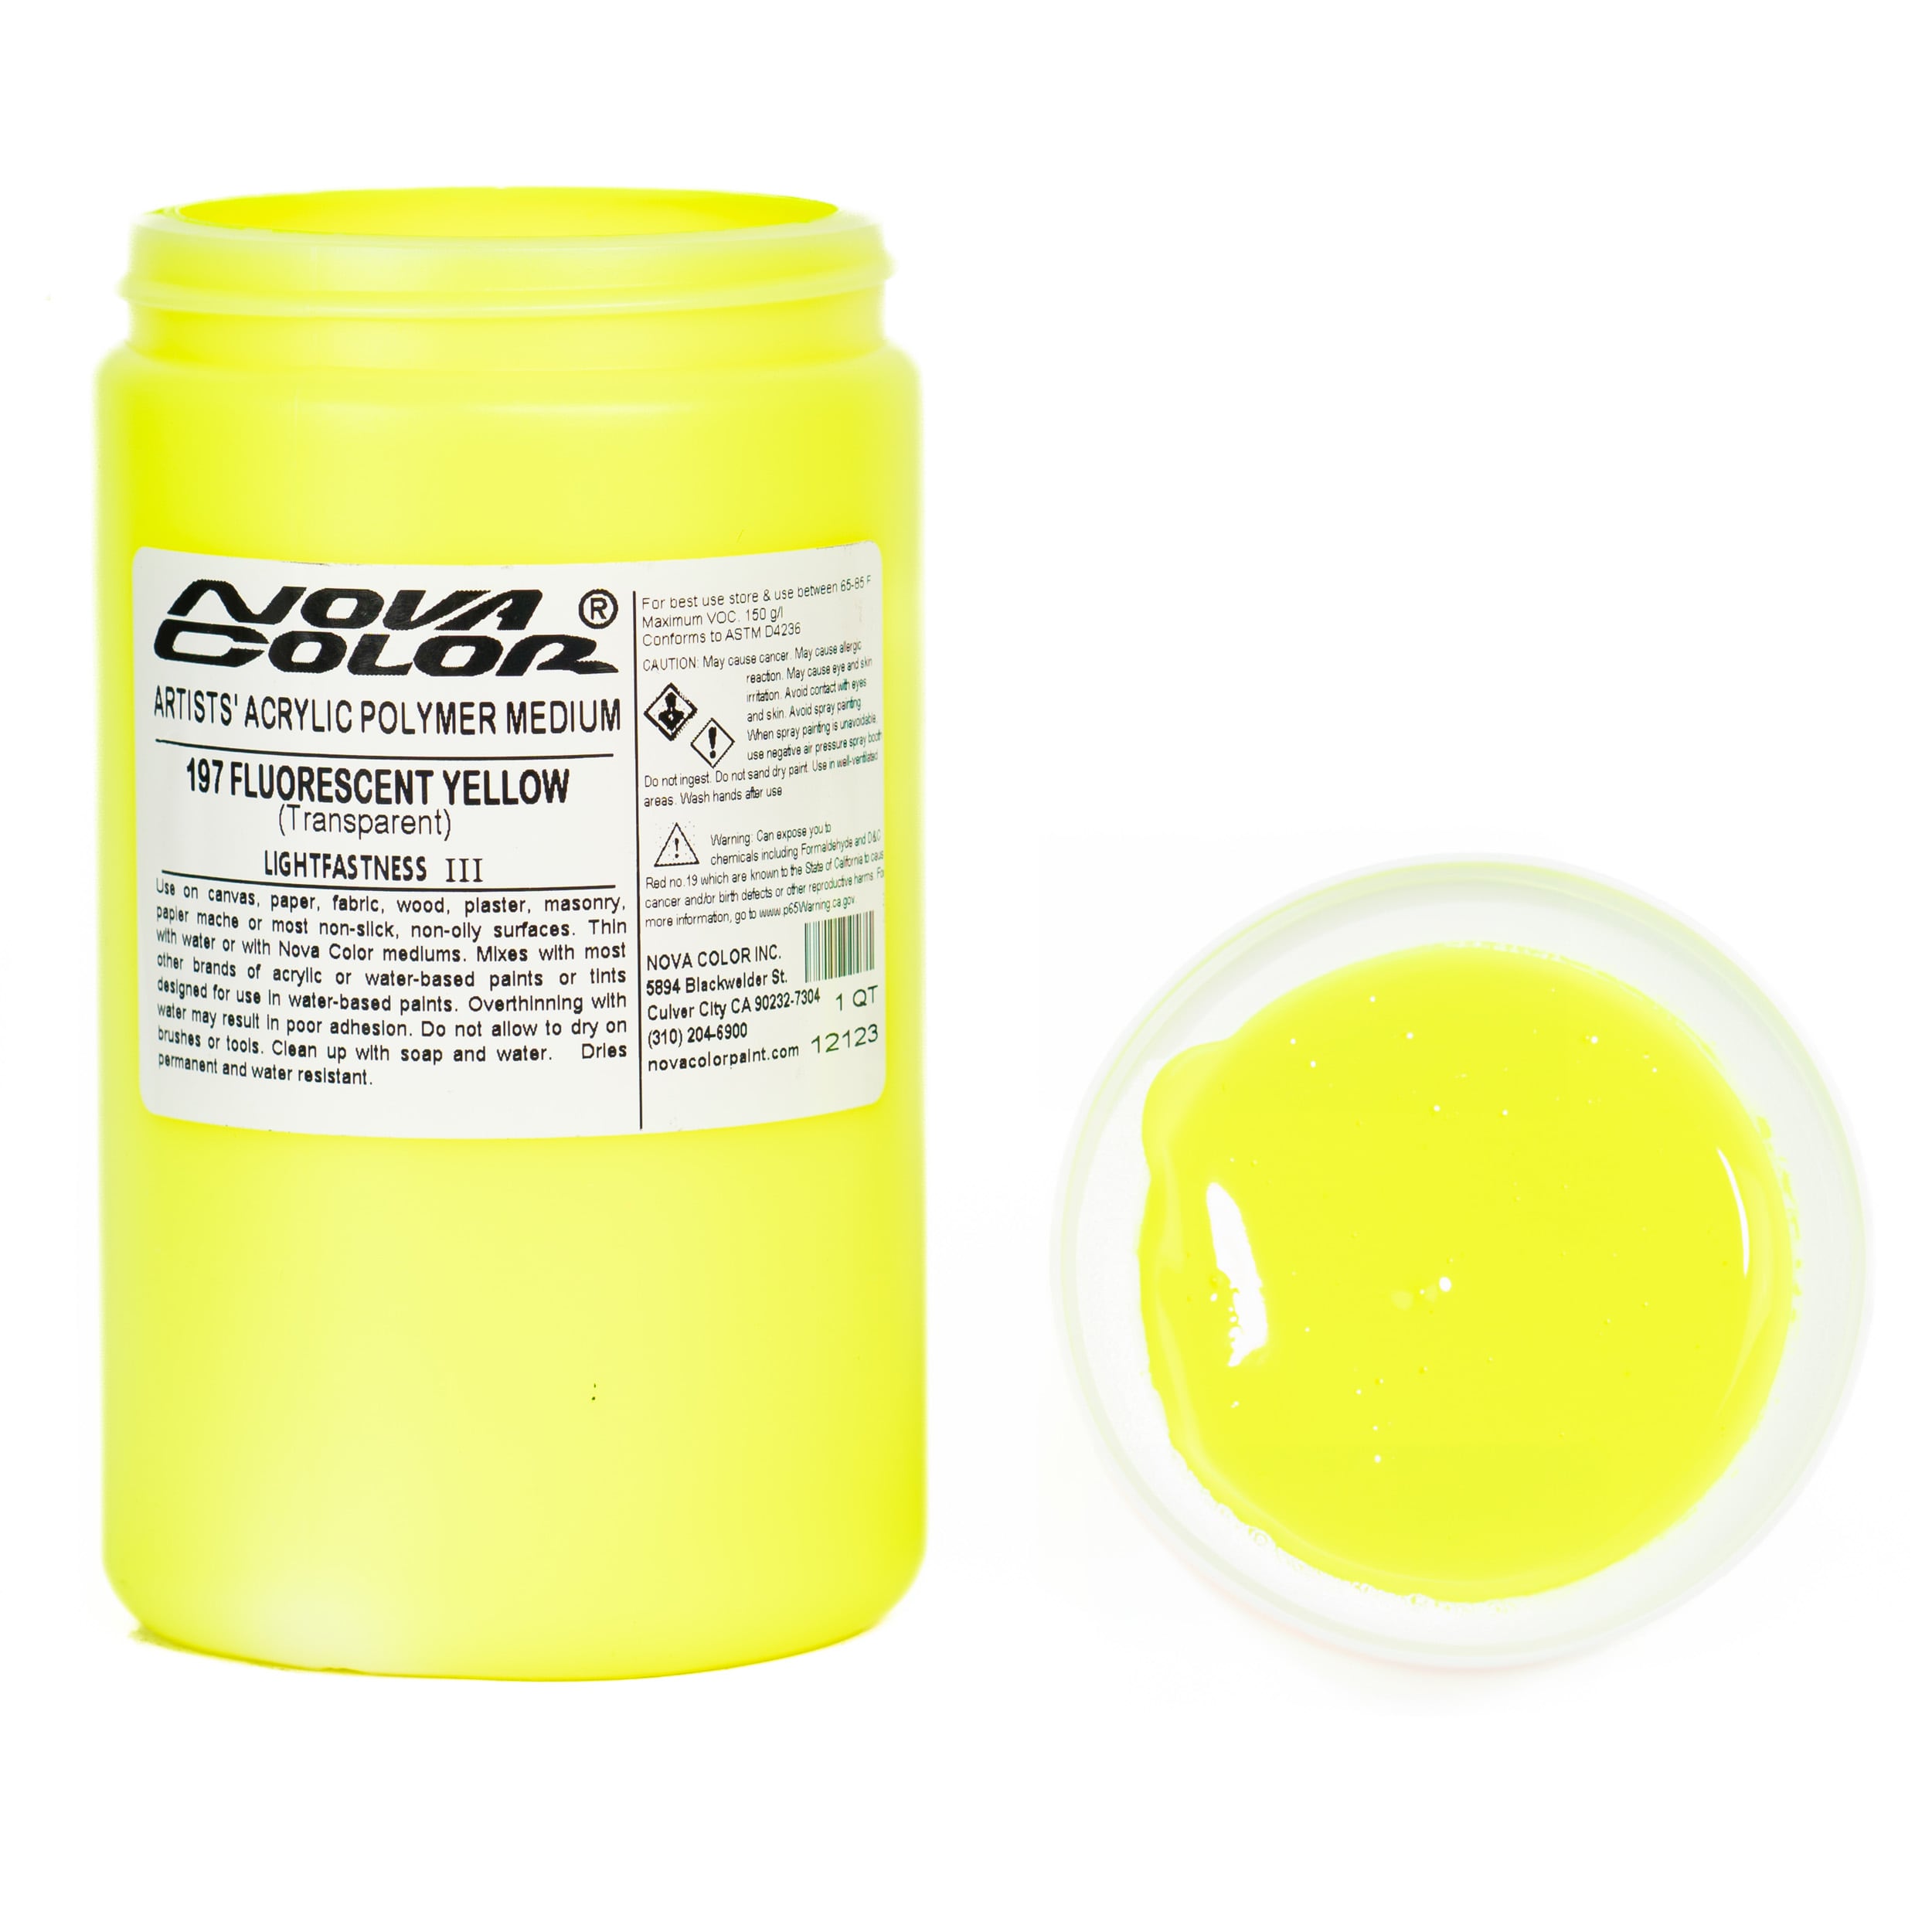 Buy #197 Fluorescent Yellow - Lightfastness:, - Transparent Online